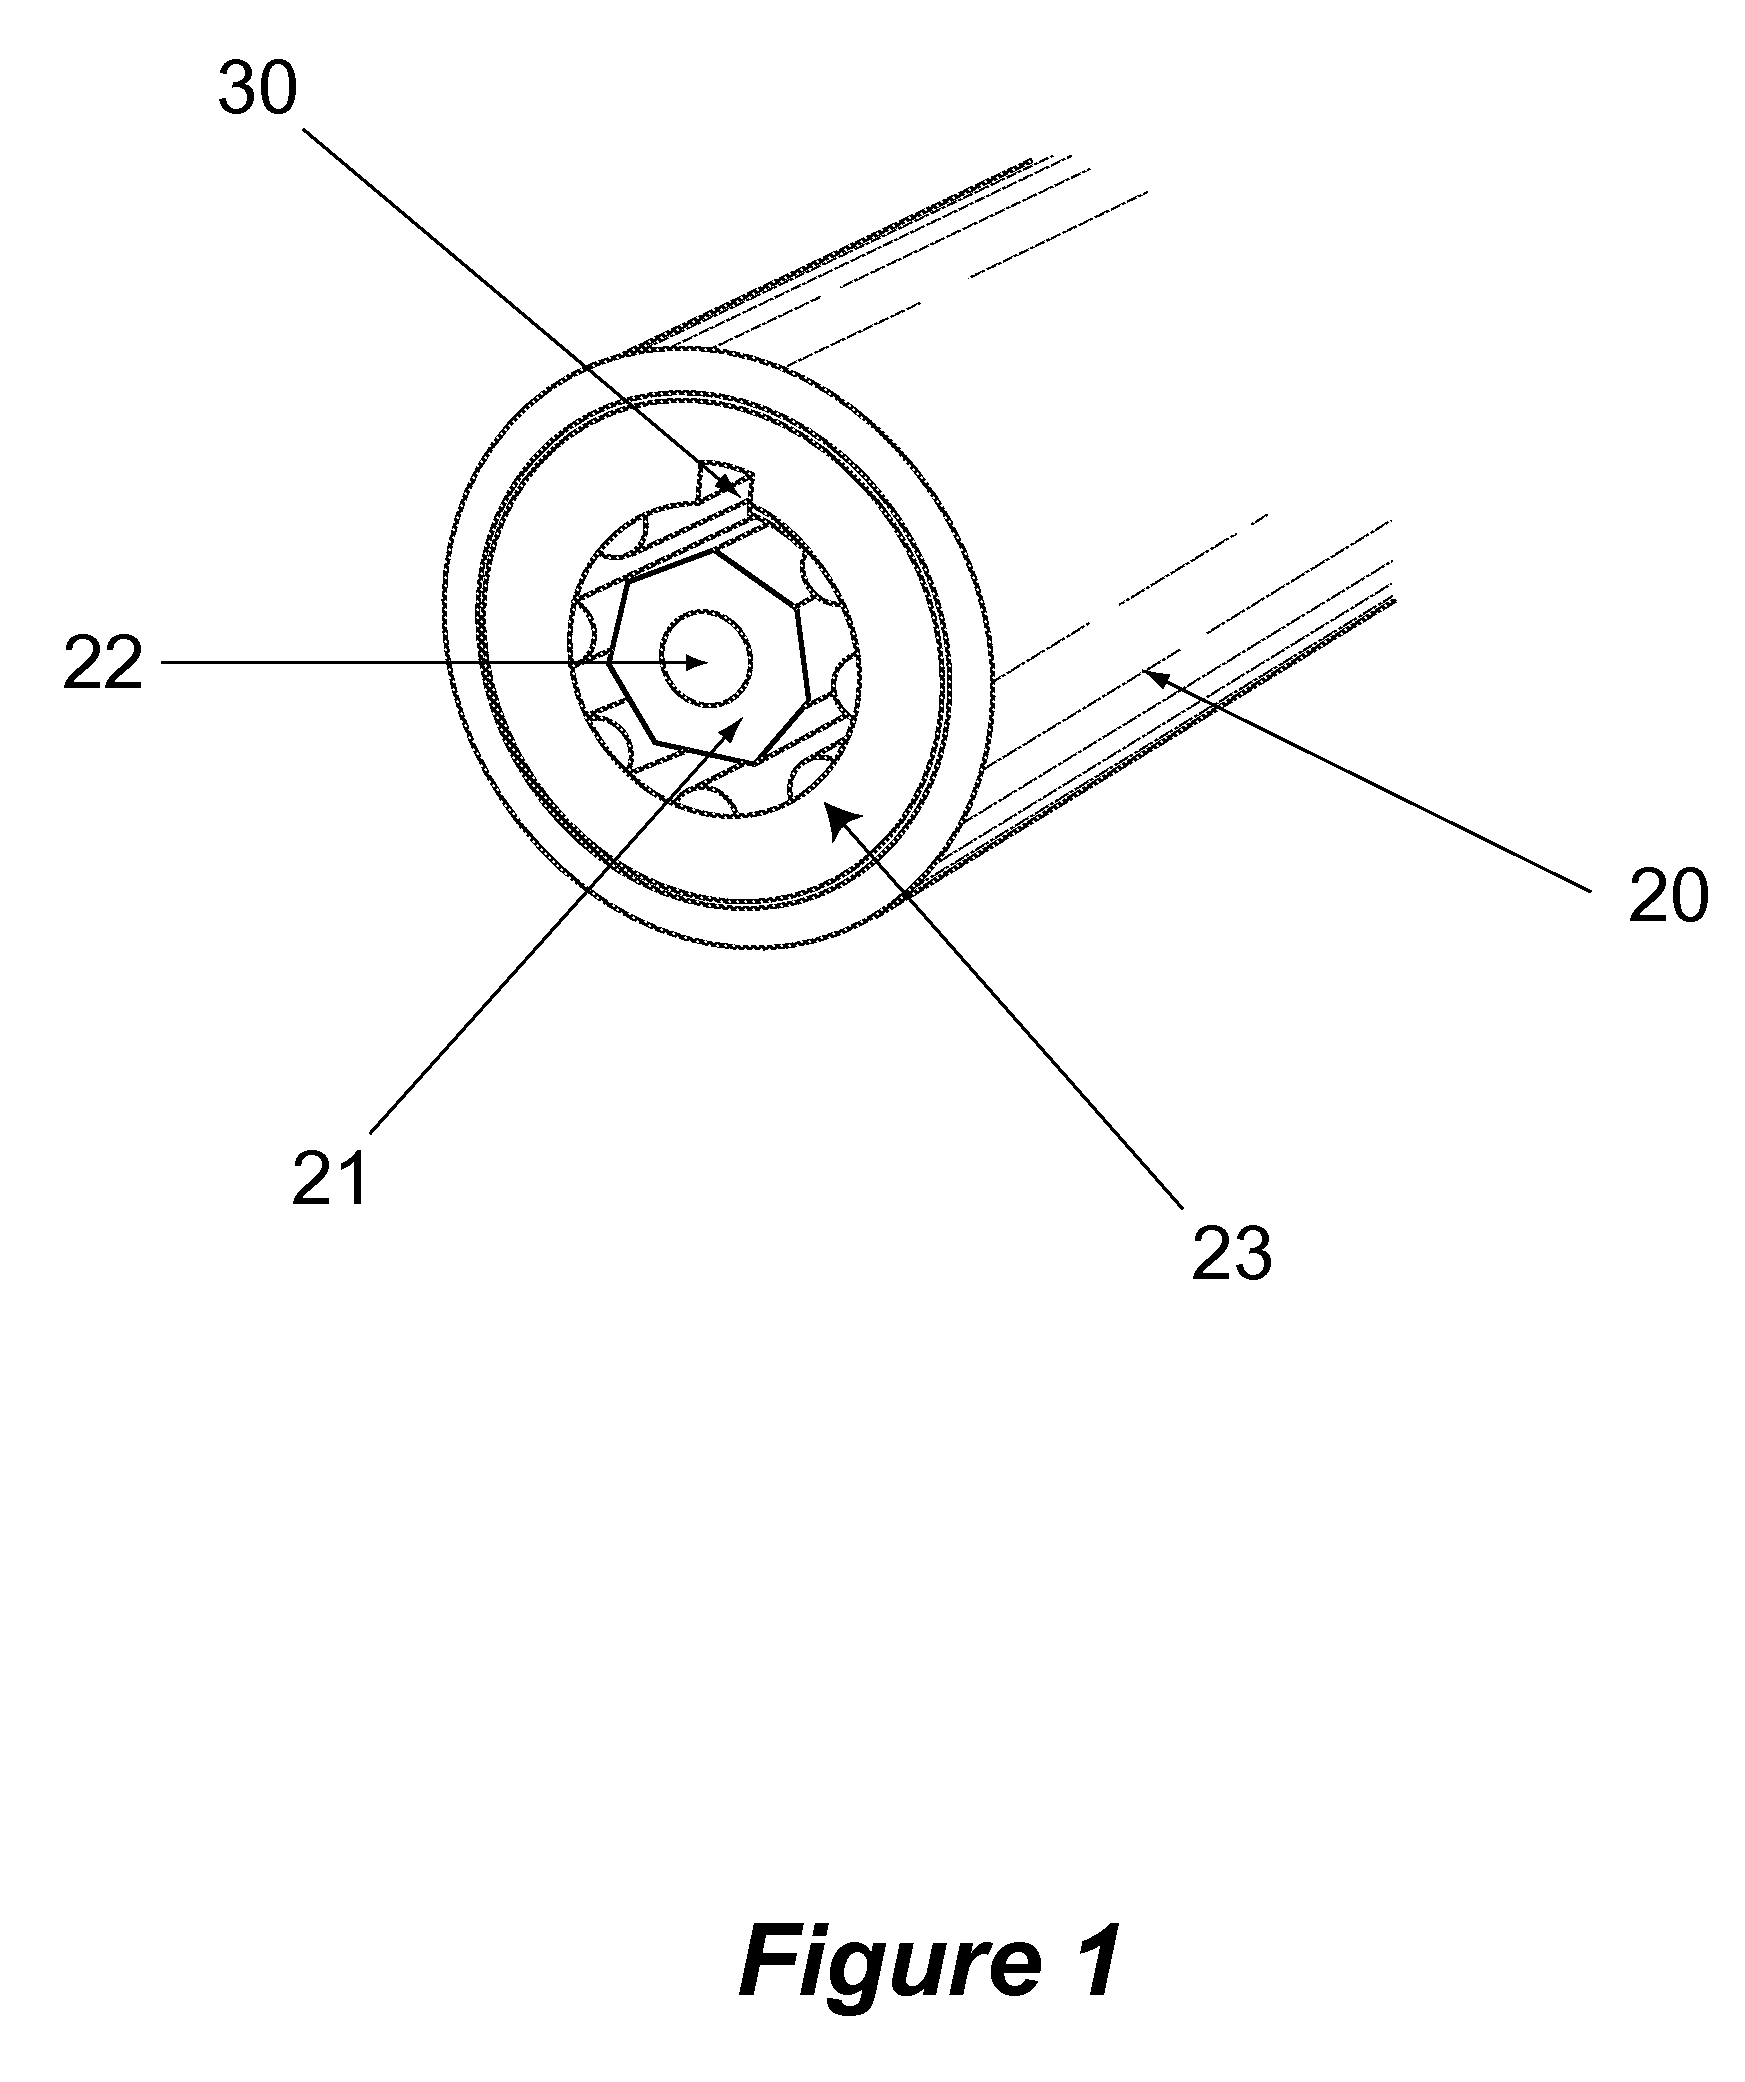 Tubular radial pin tumbler lock